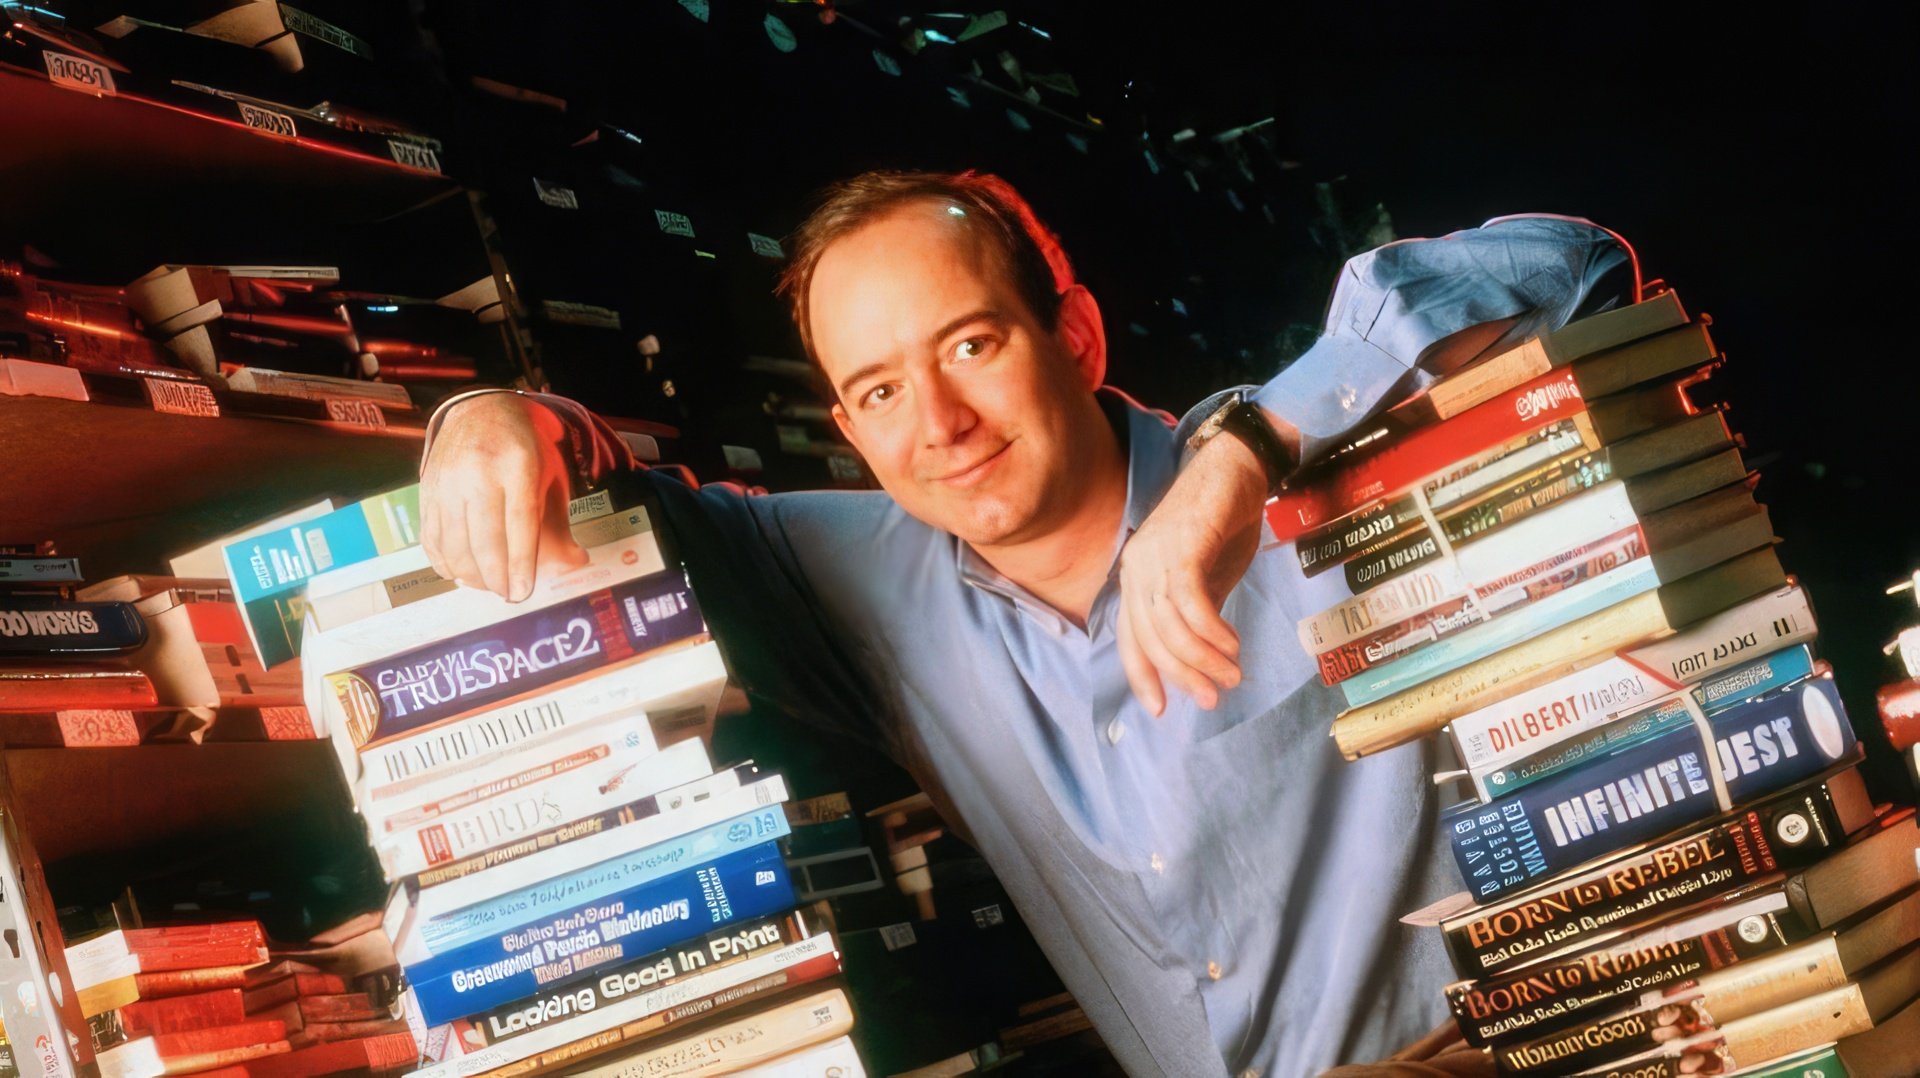 Jeff Bezos always loved books